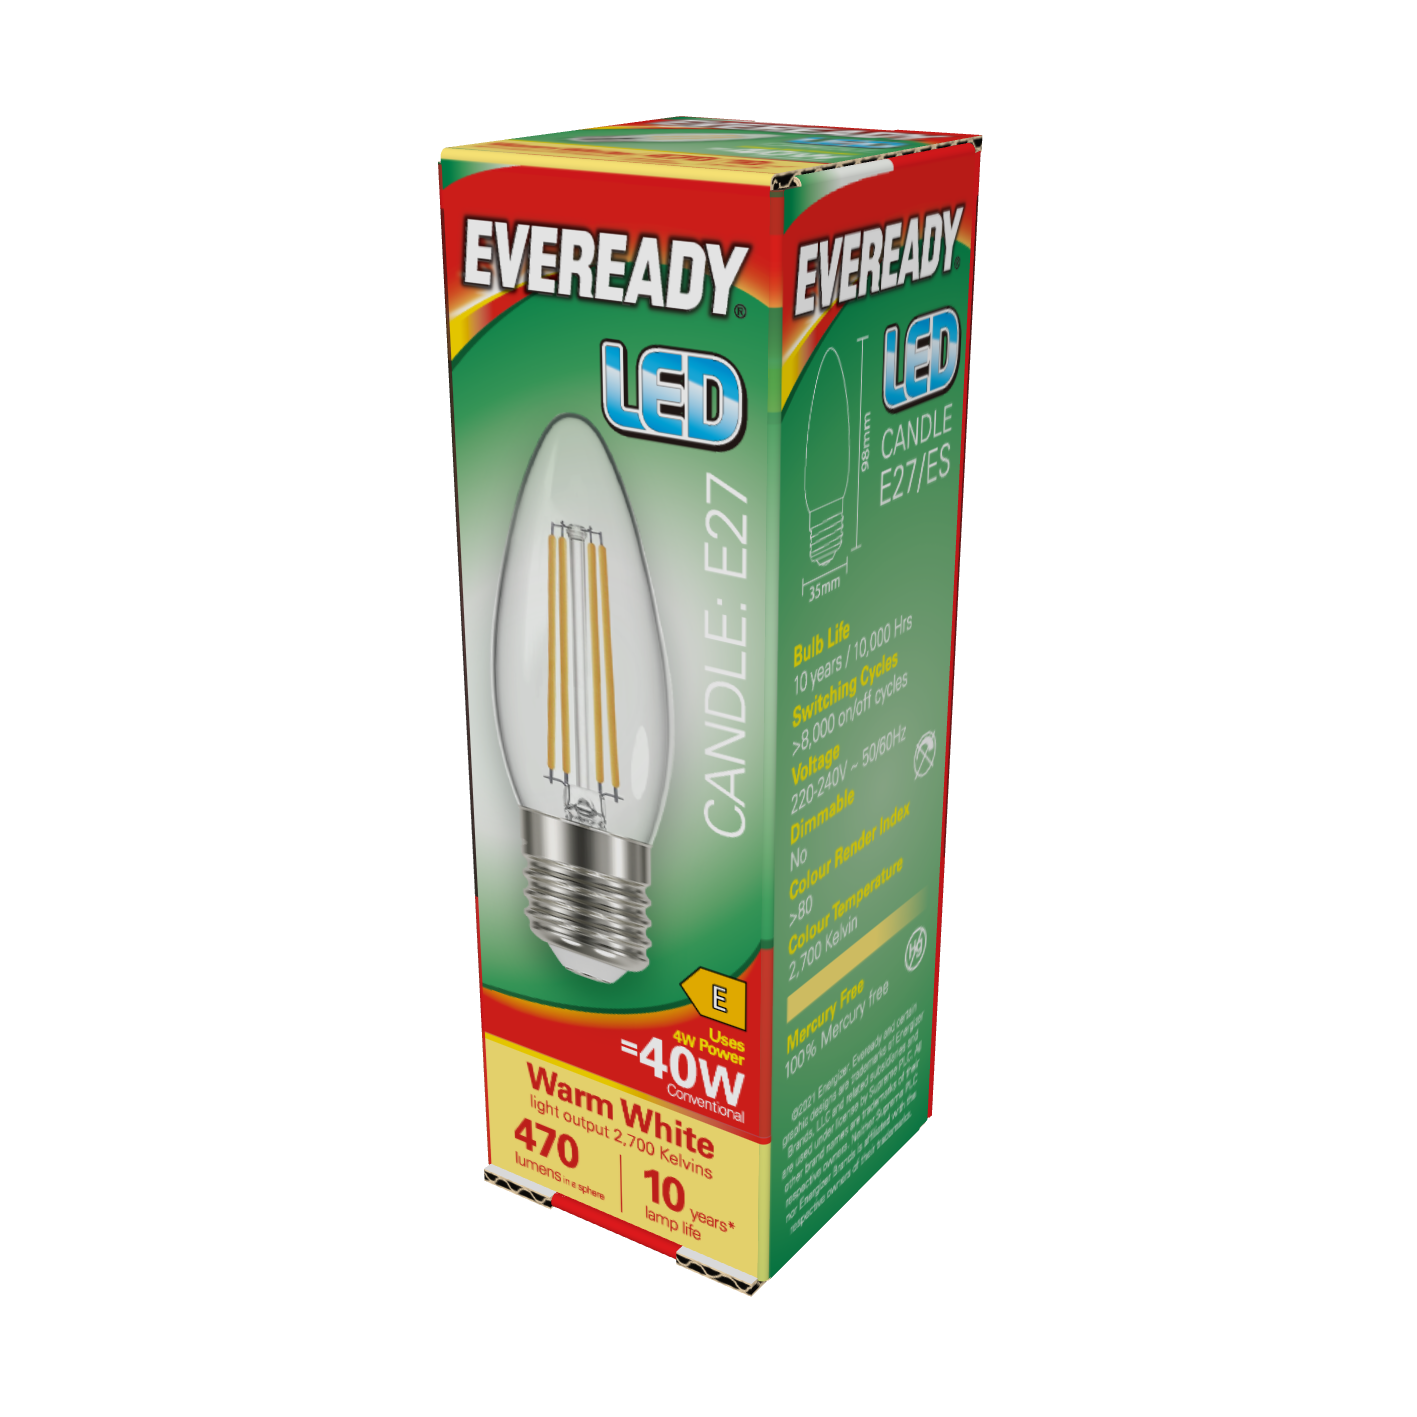 Eveready LED Filament Candle E27 (ES) 470lm 4W 2,700K (Warm White), Box of 1